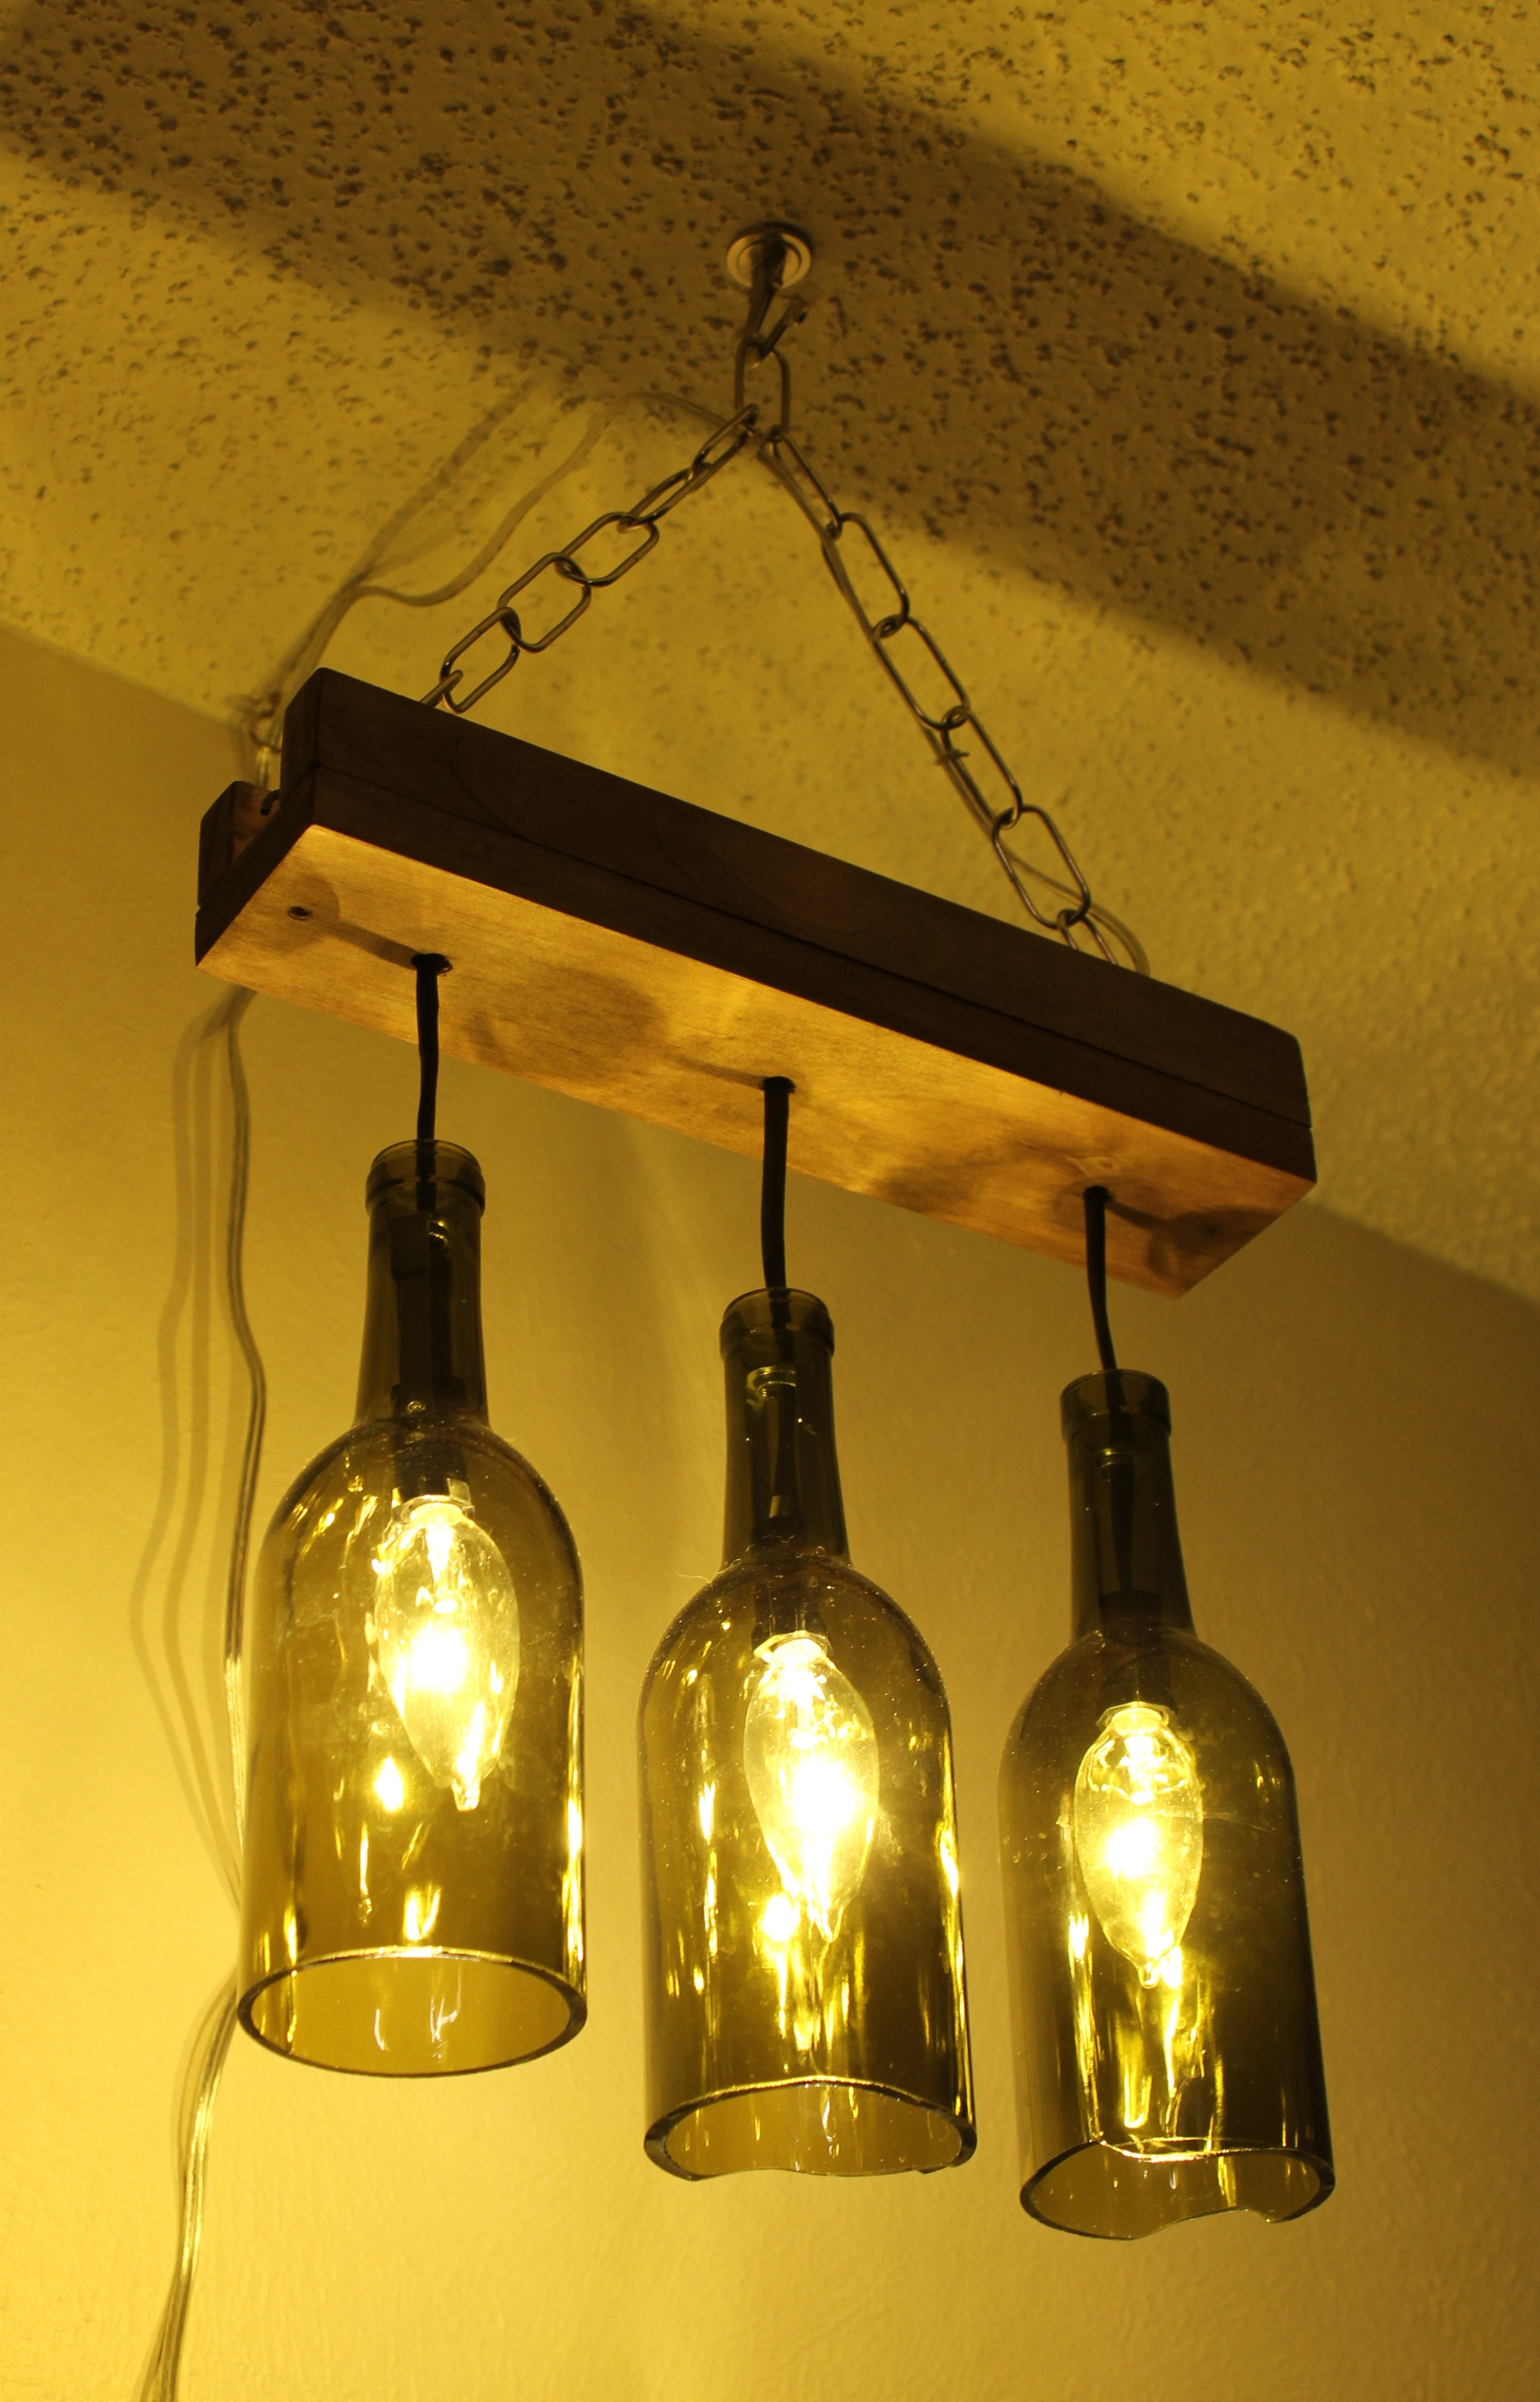 Best ideas about Wine Bottle Lamp DIY
. Save or Pin Making a wine bottle chandelier Now.